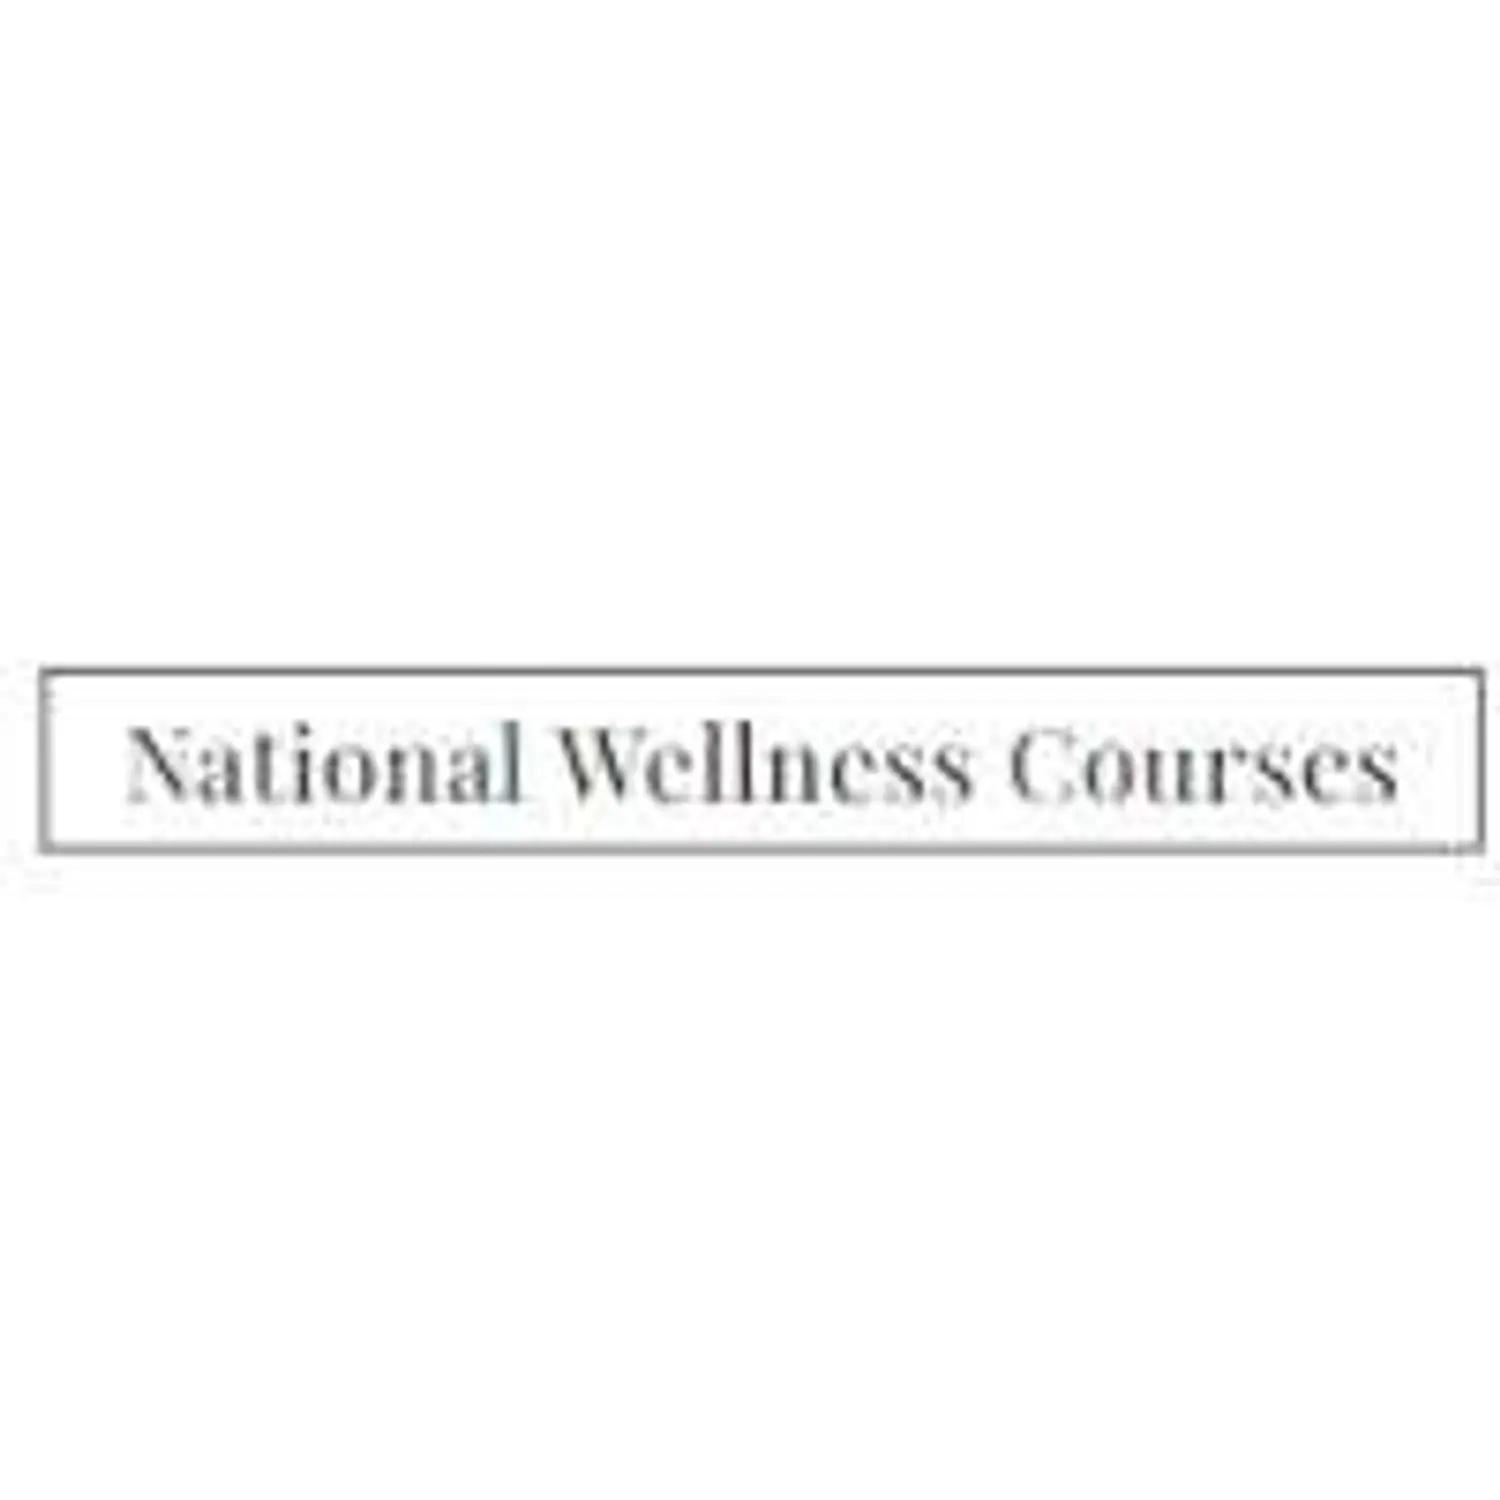 National Wellness Courses